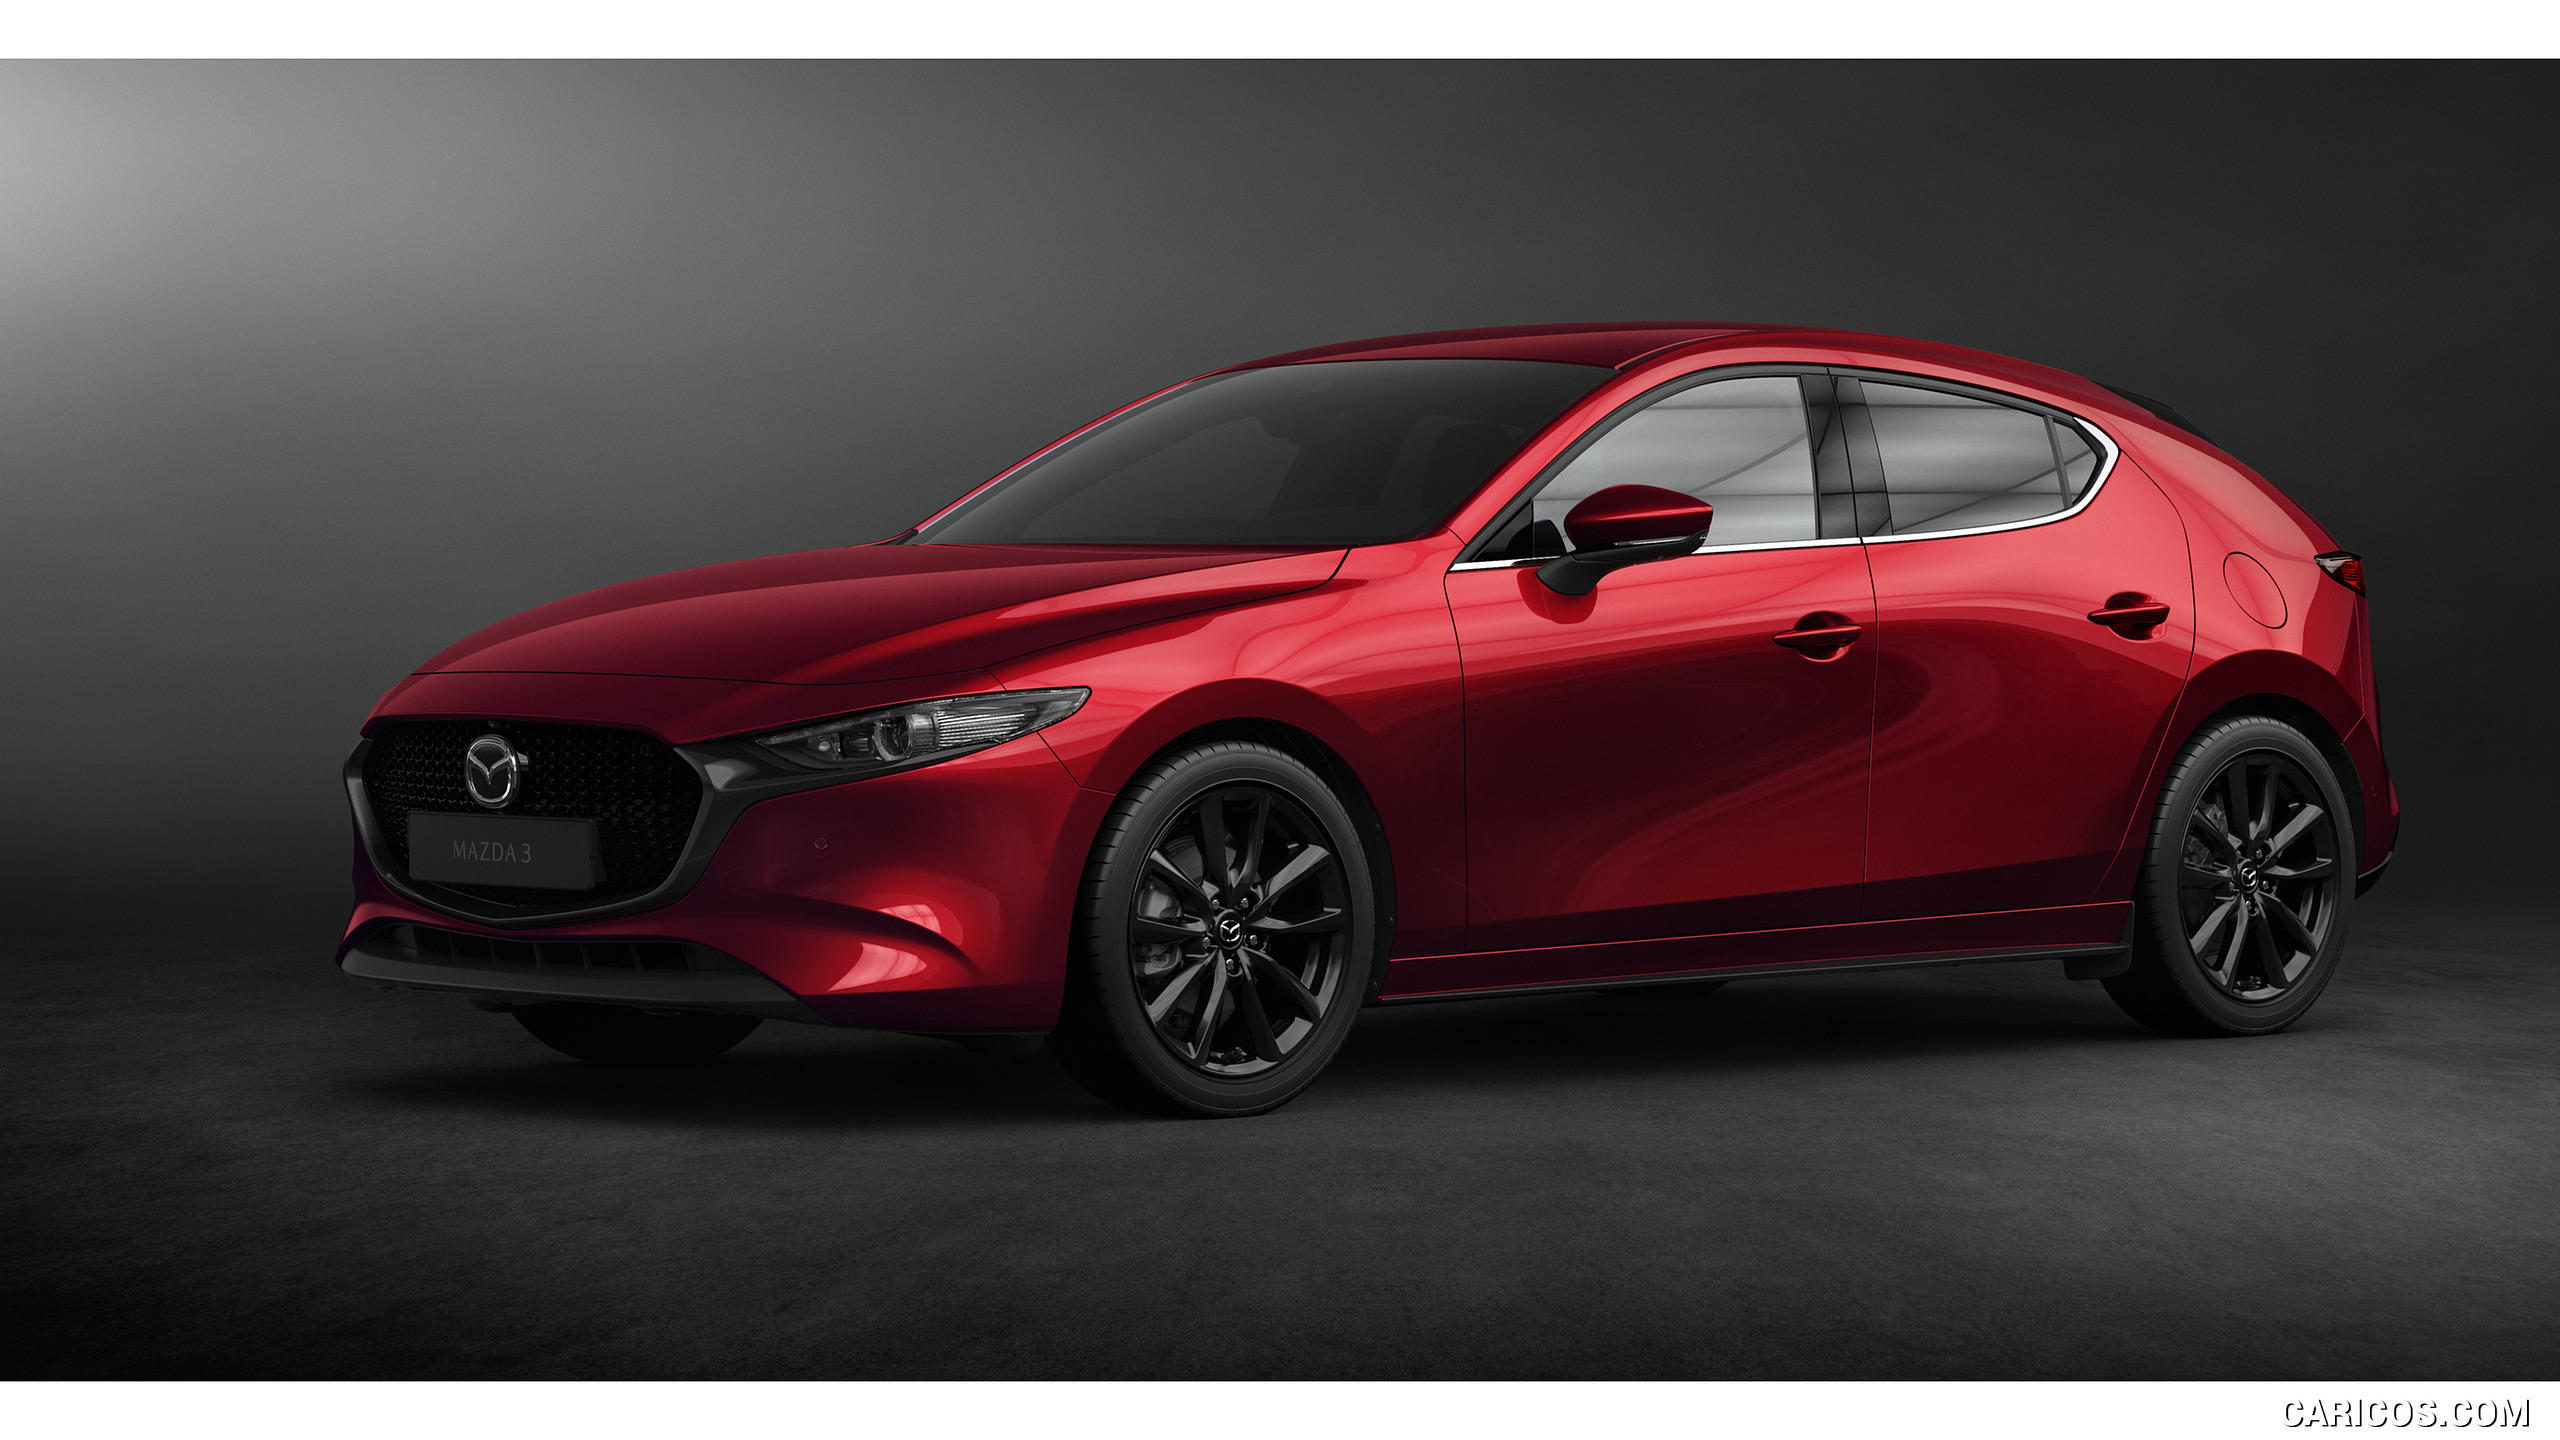 2019 Mazda3 Hatchback - Front Three-Quarter, #24 of 44